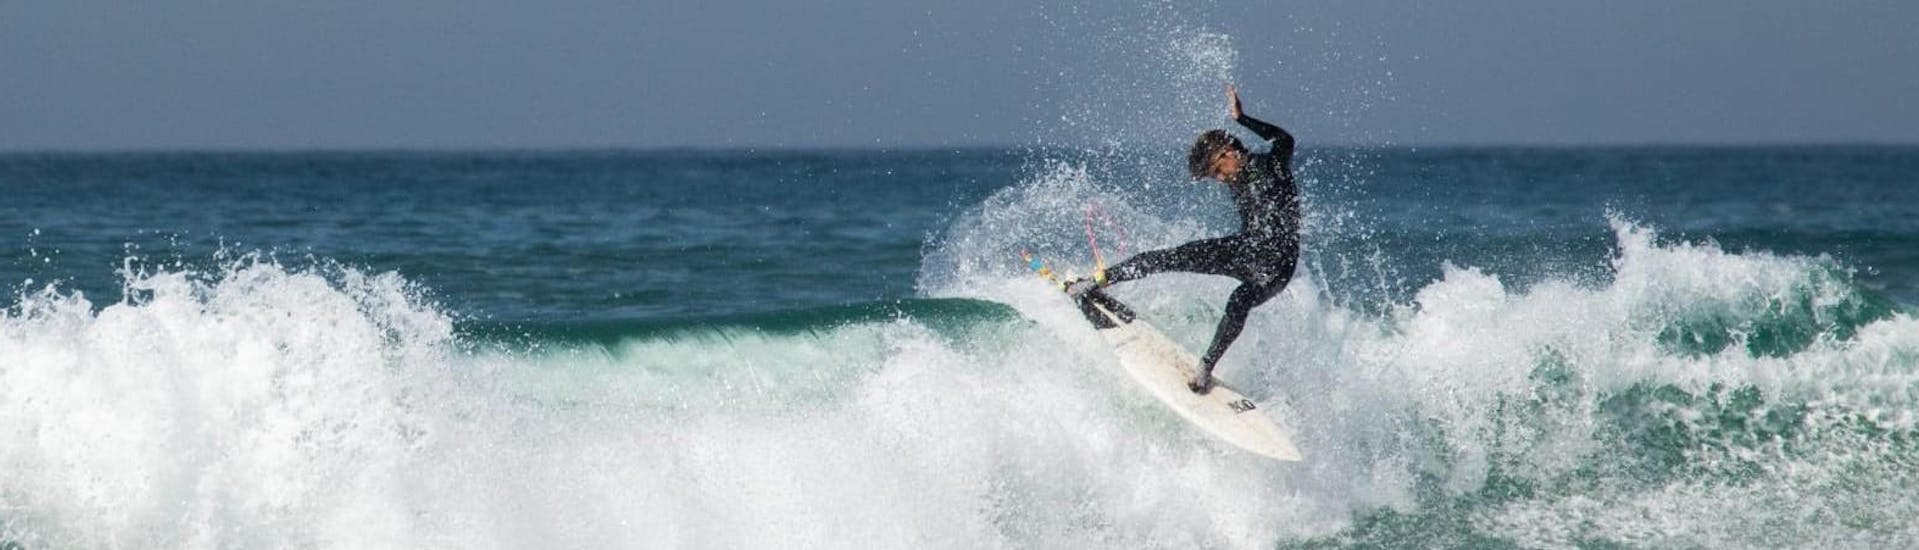 Lezioni private di surf a Moliets-et-Maâ da 6 anni per tutti i livelli.